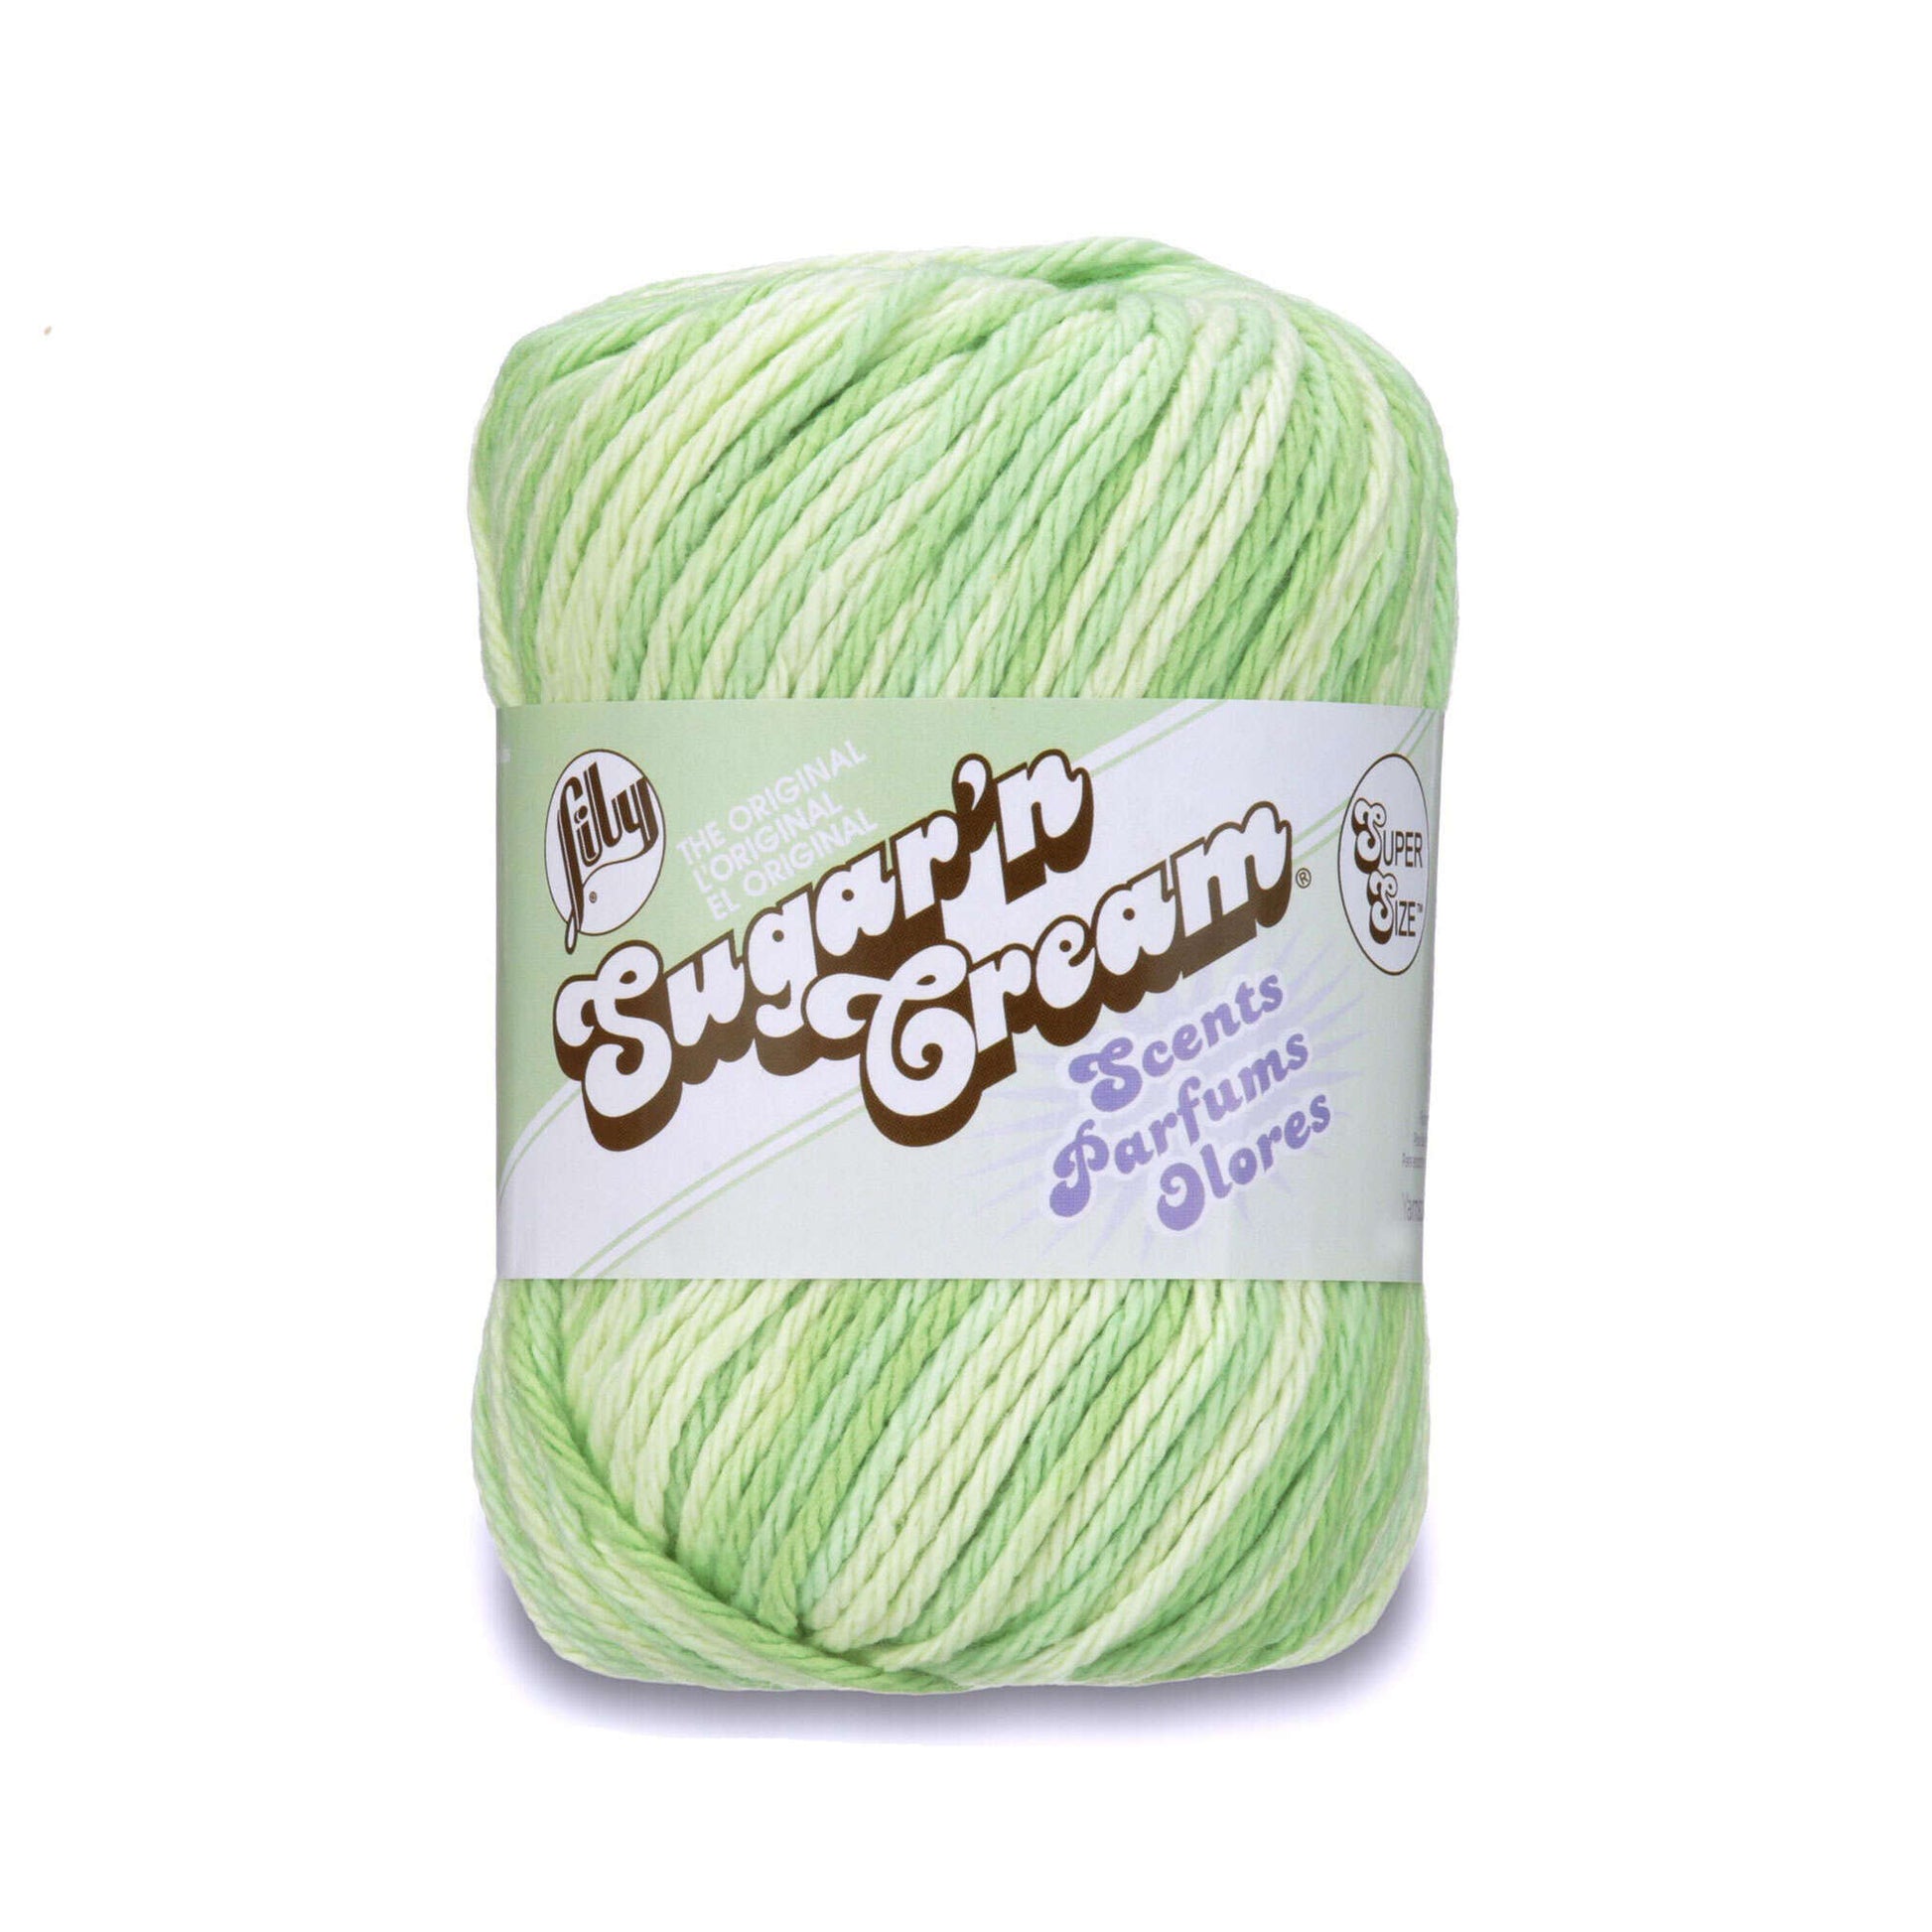 Lily Sugar'n Cream Super Size Scents Yarn - Clearance Shades Aloe Vera